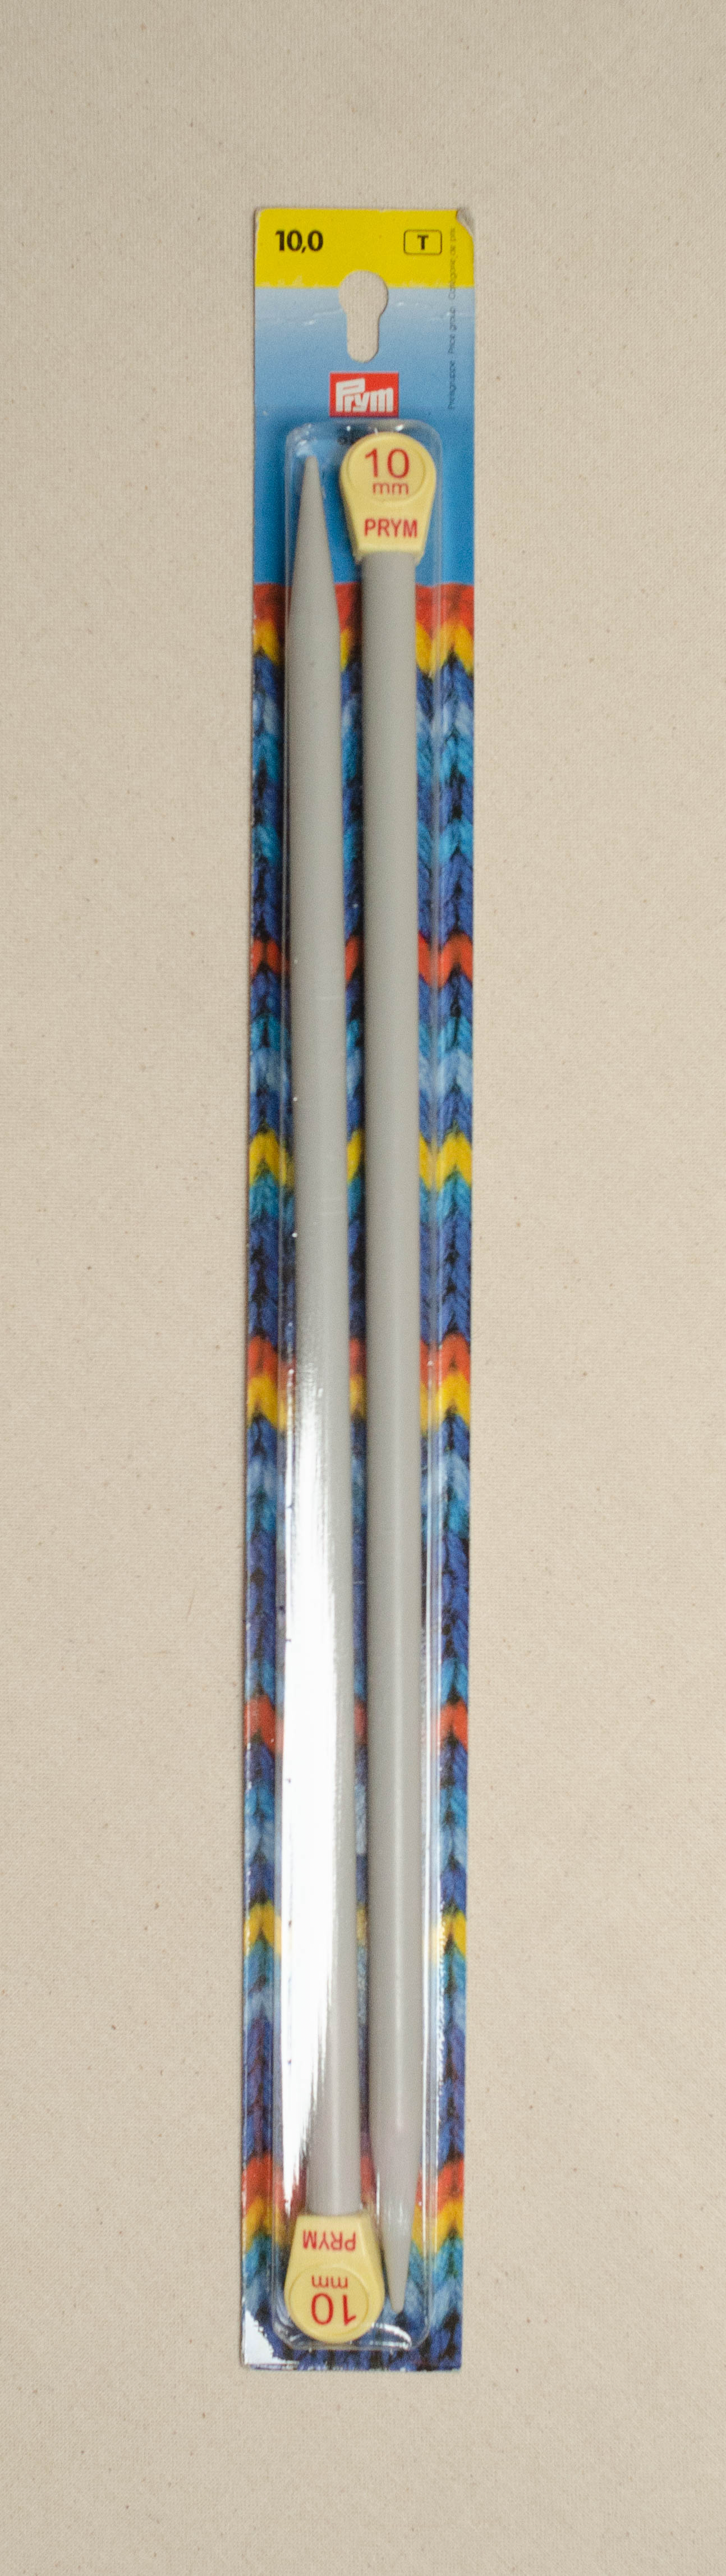 Prym 35cm Knitting Needles - 35cm X 10.0mm